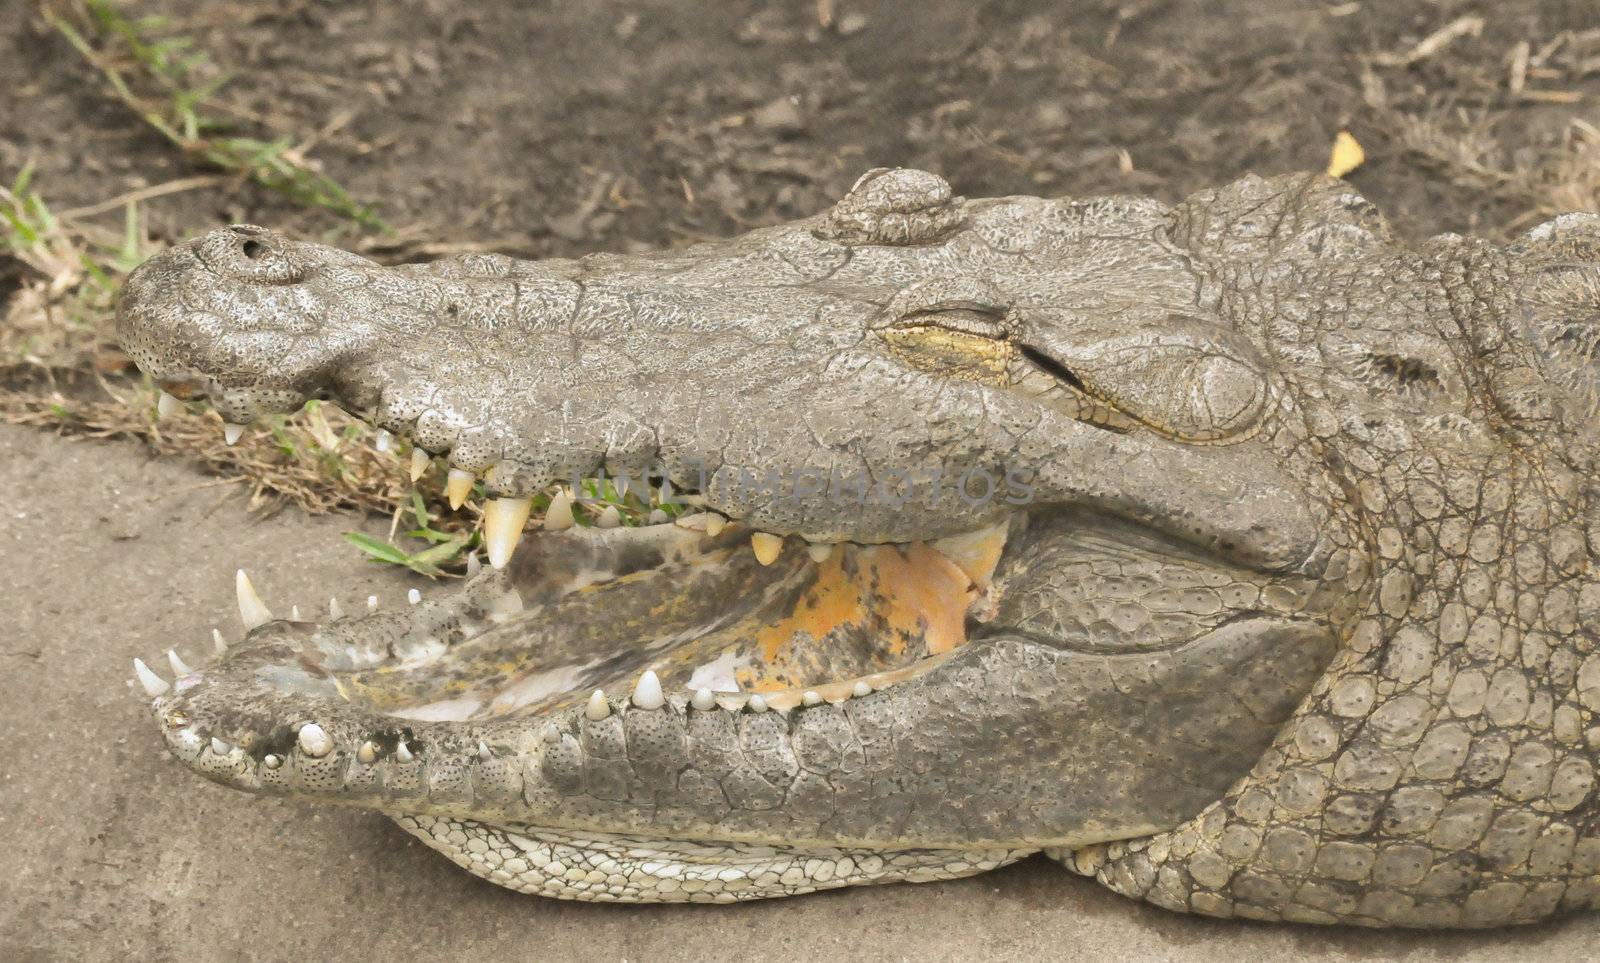 Crocodile shows his teeth by RefocusPhoto